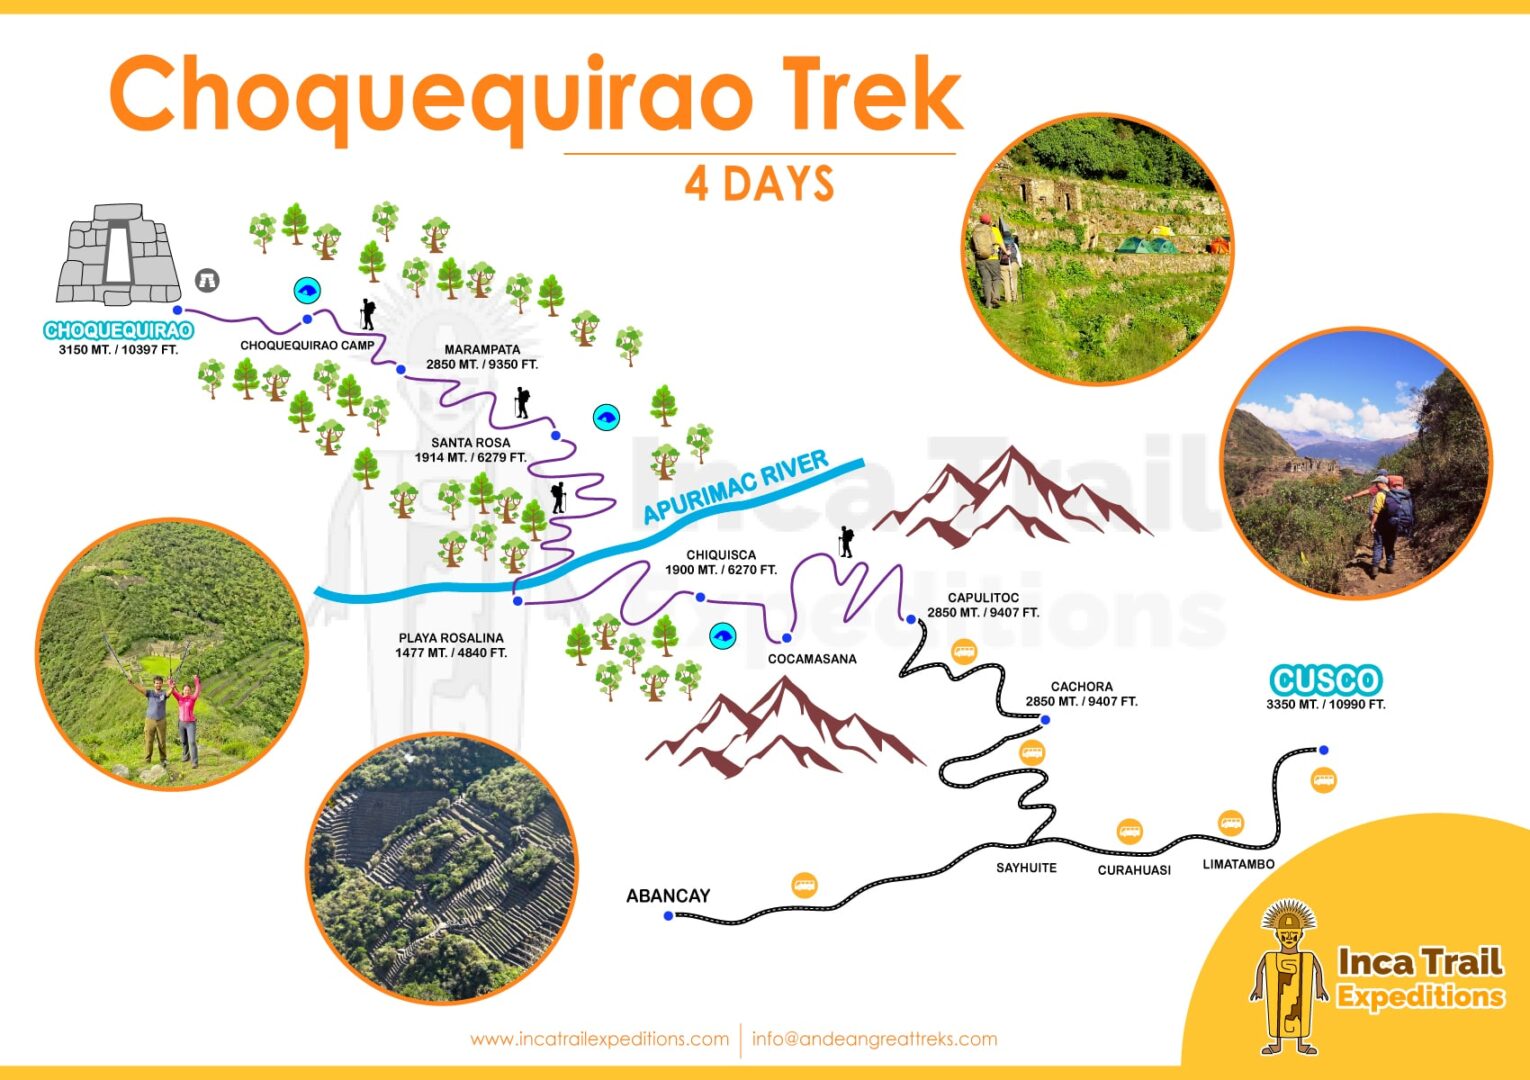 Trek to Choquequirao Inca Site 4 Days